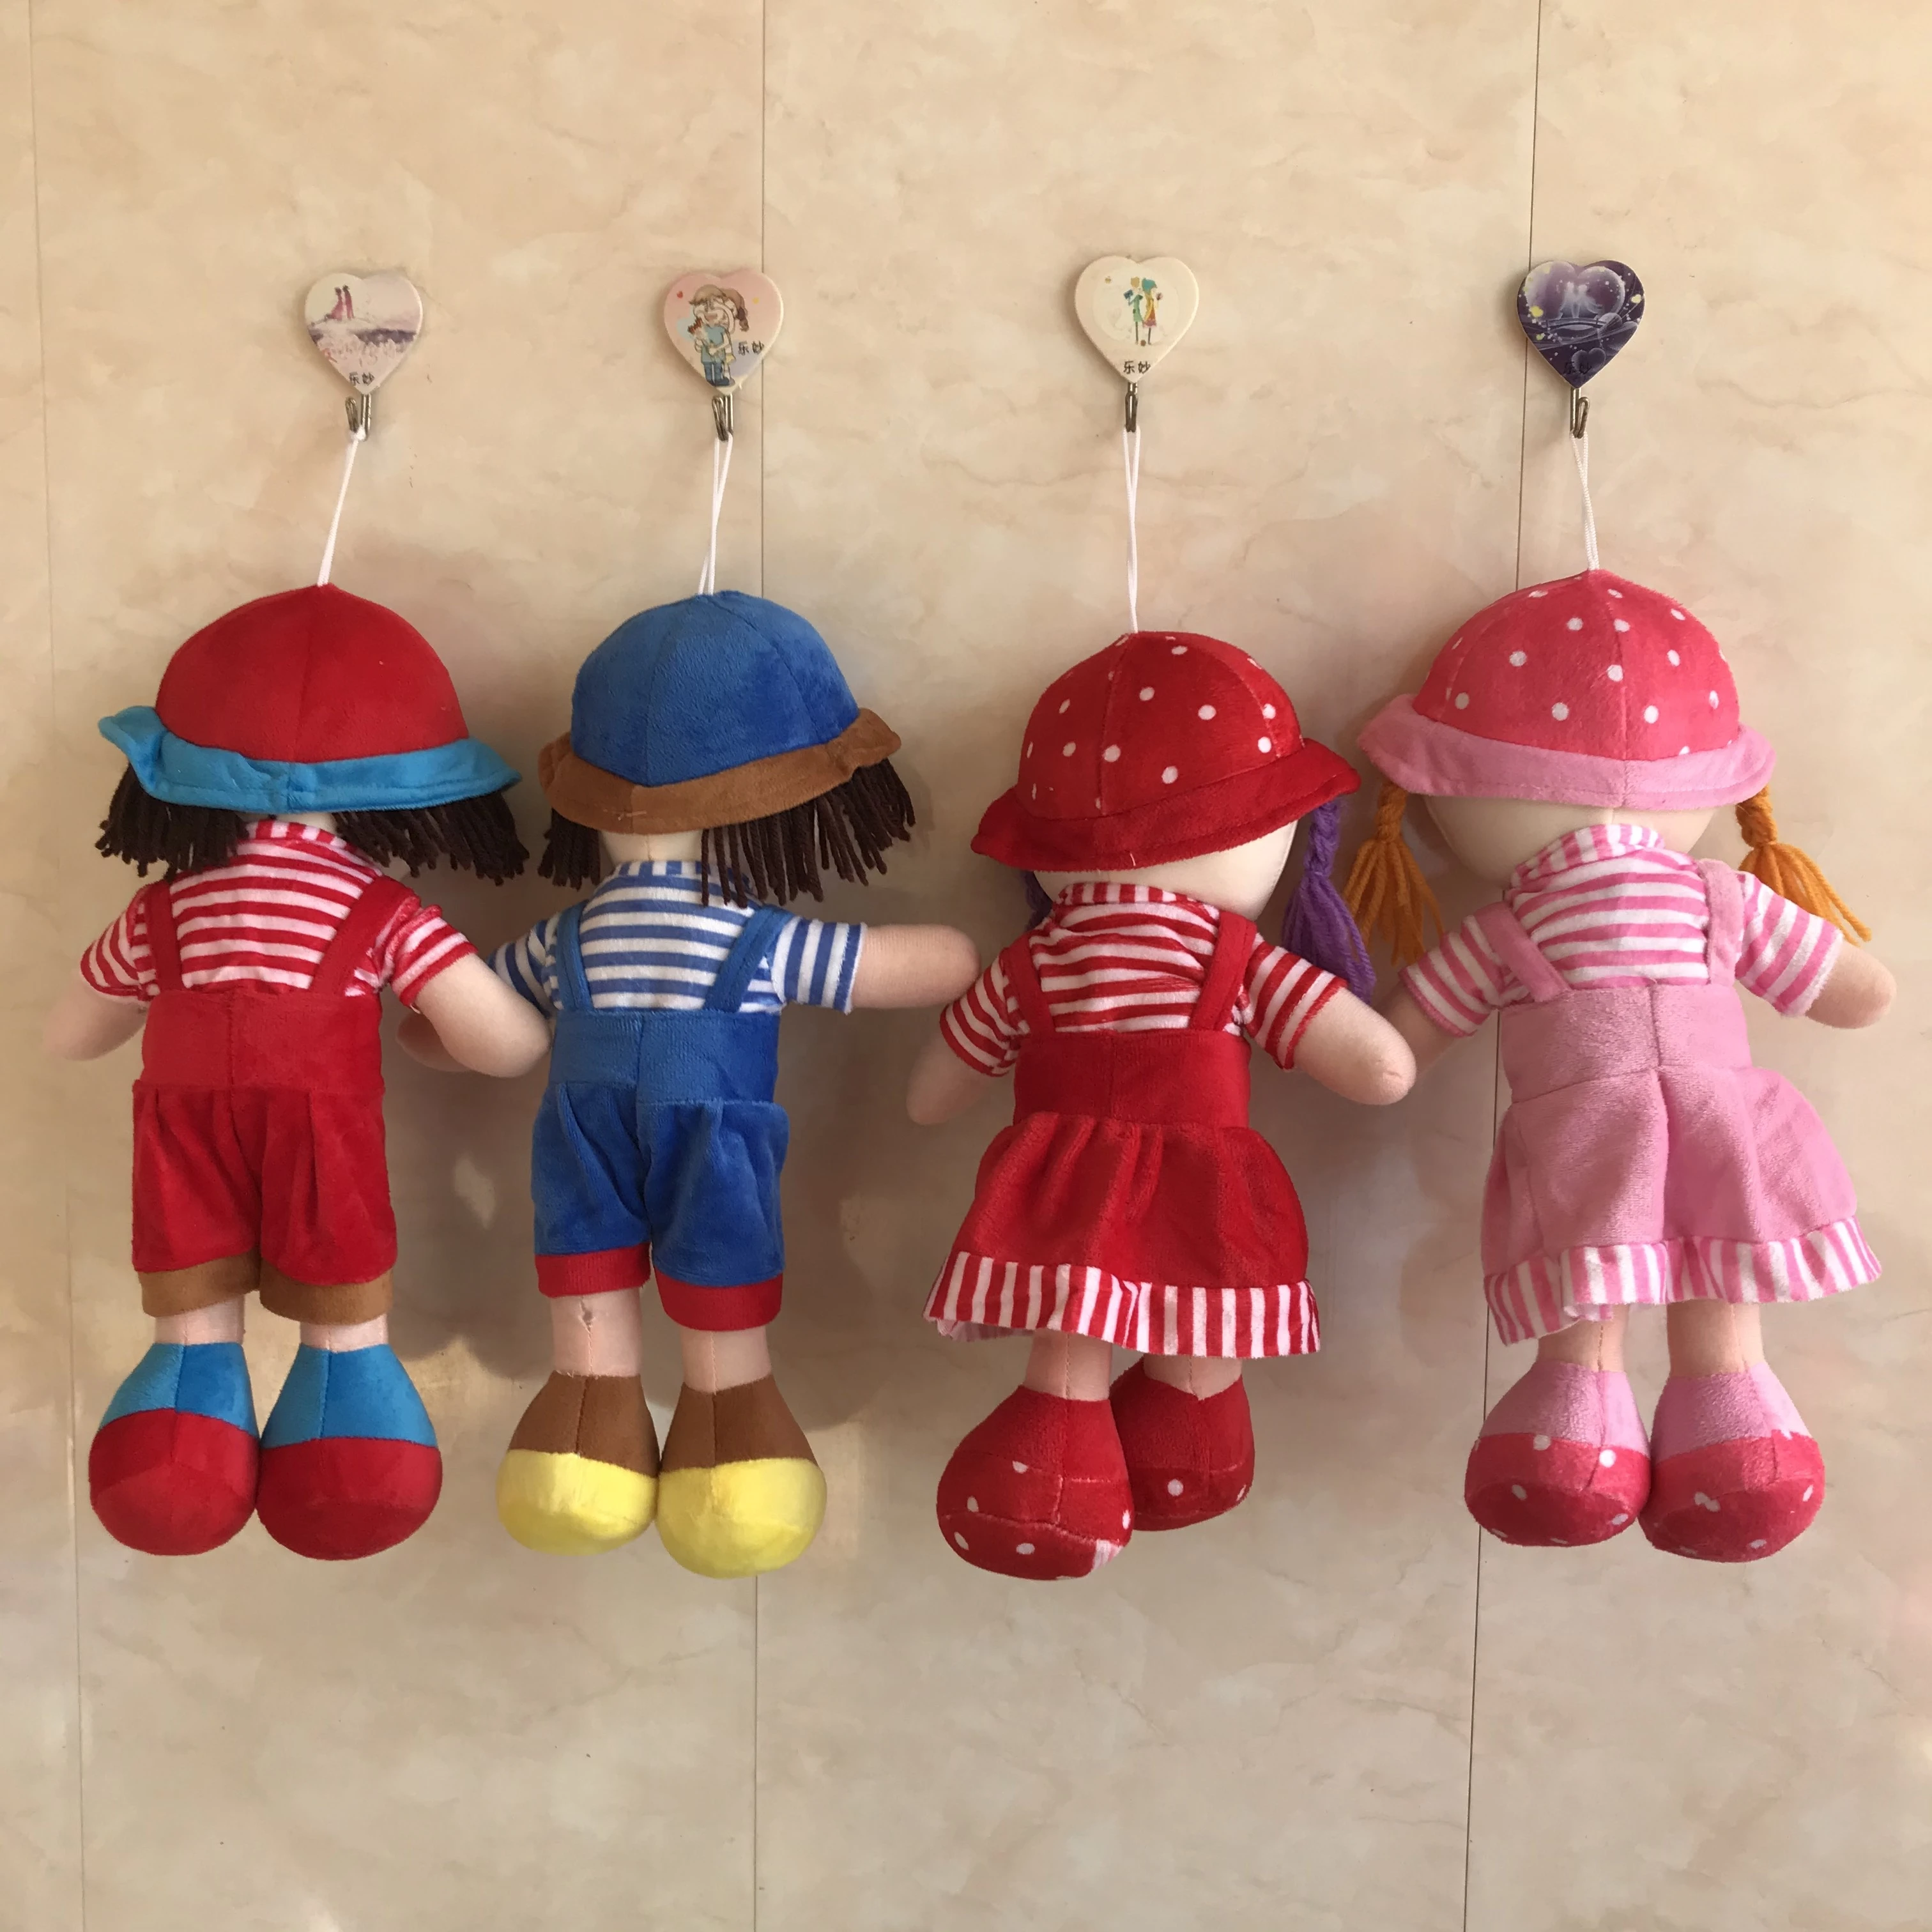 New custom plush doll soft plush toys promotional cartoon sweet model girls kids toys